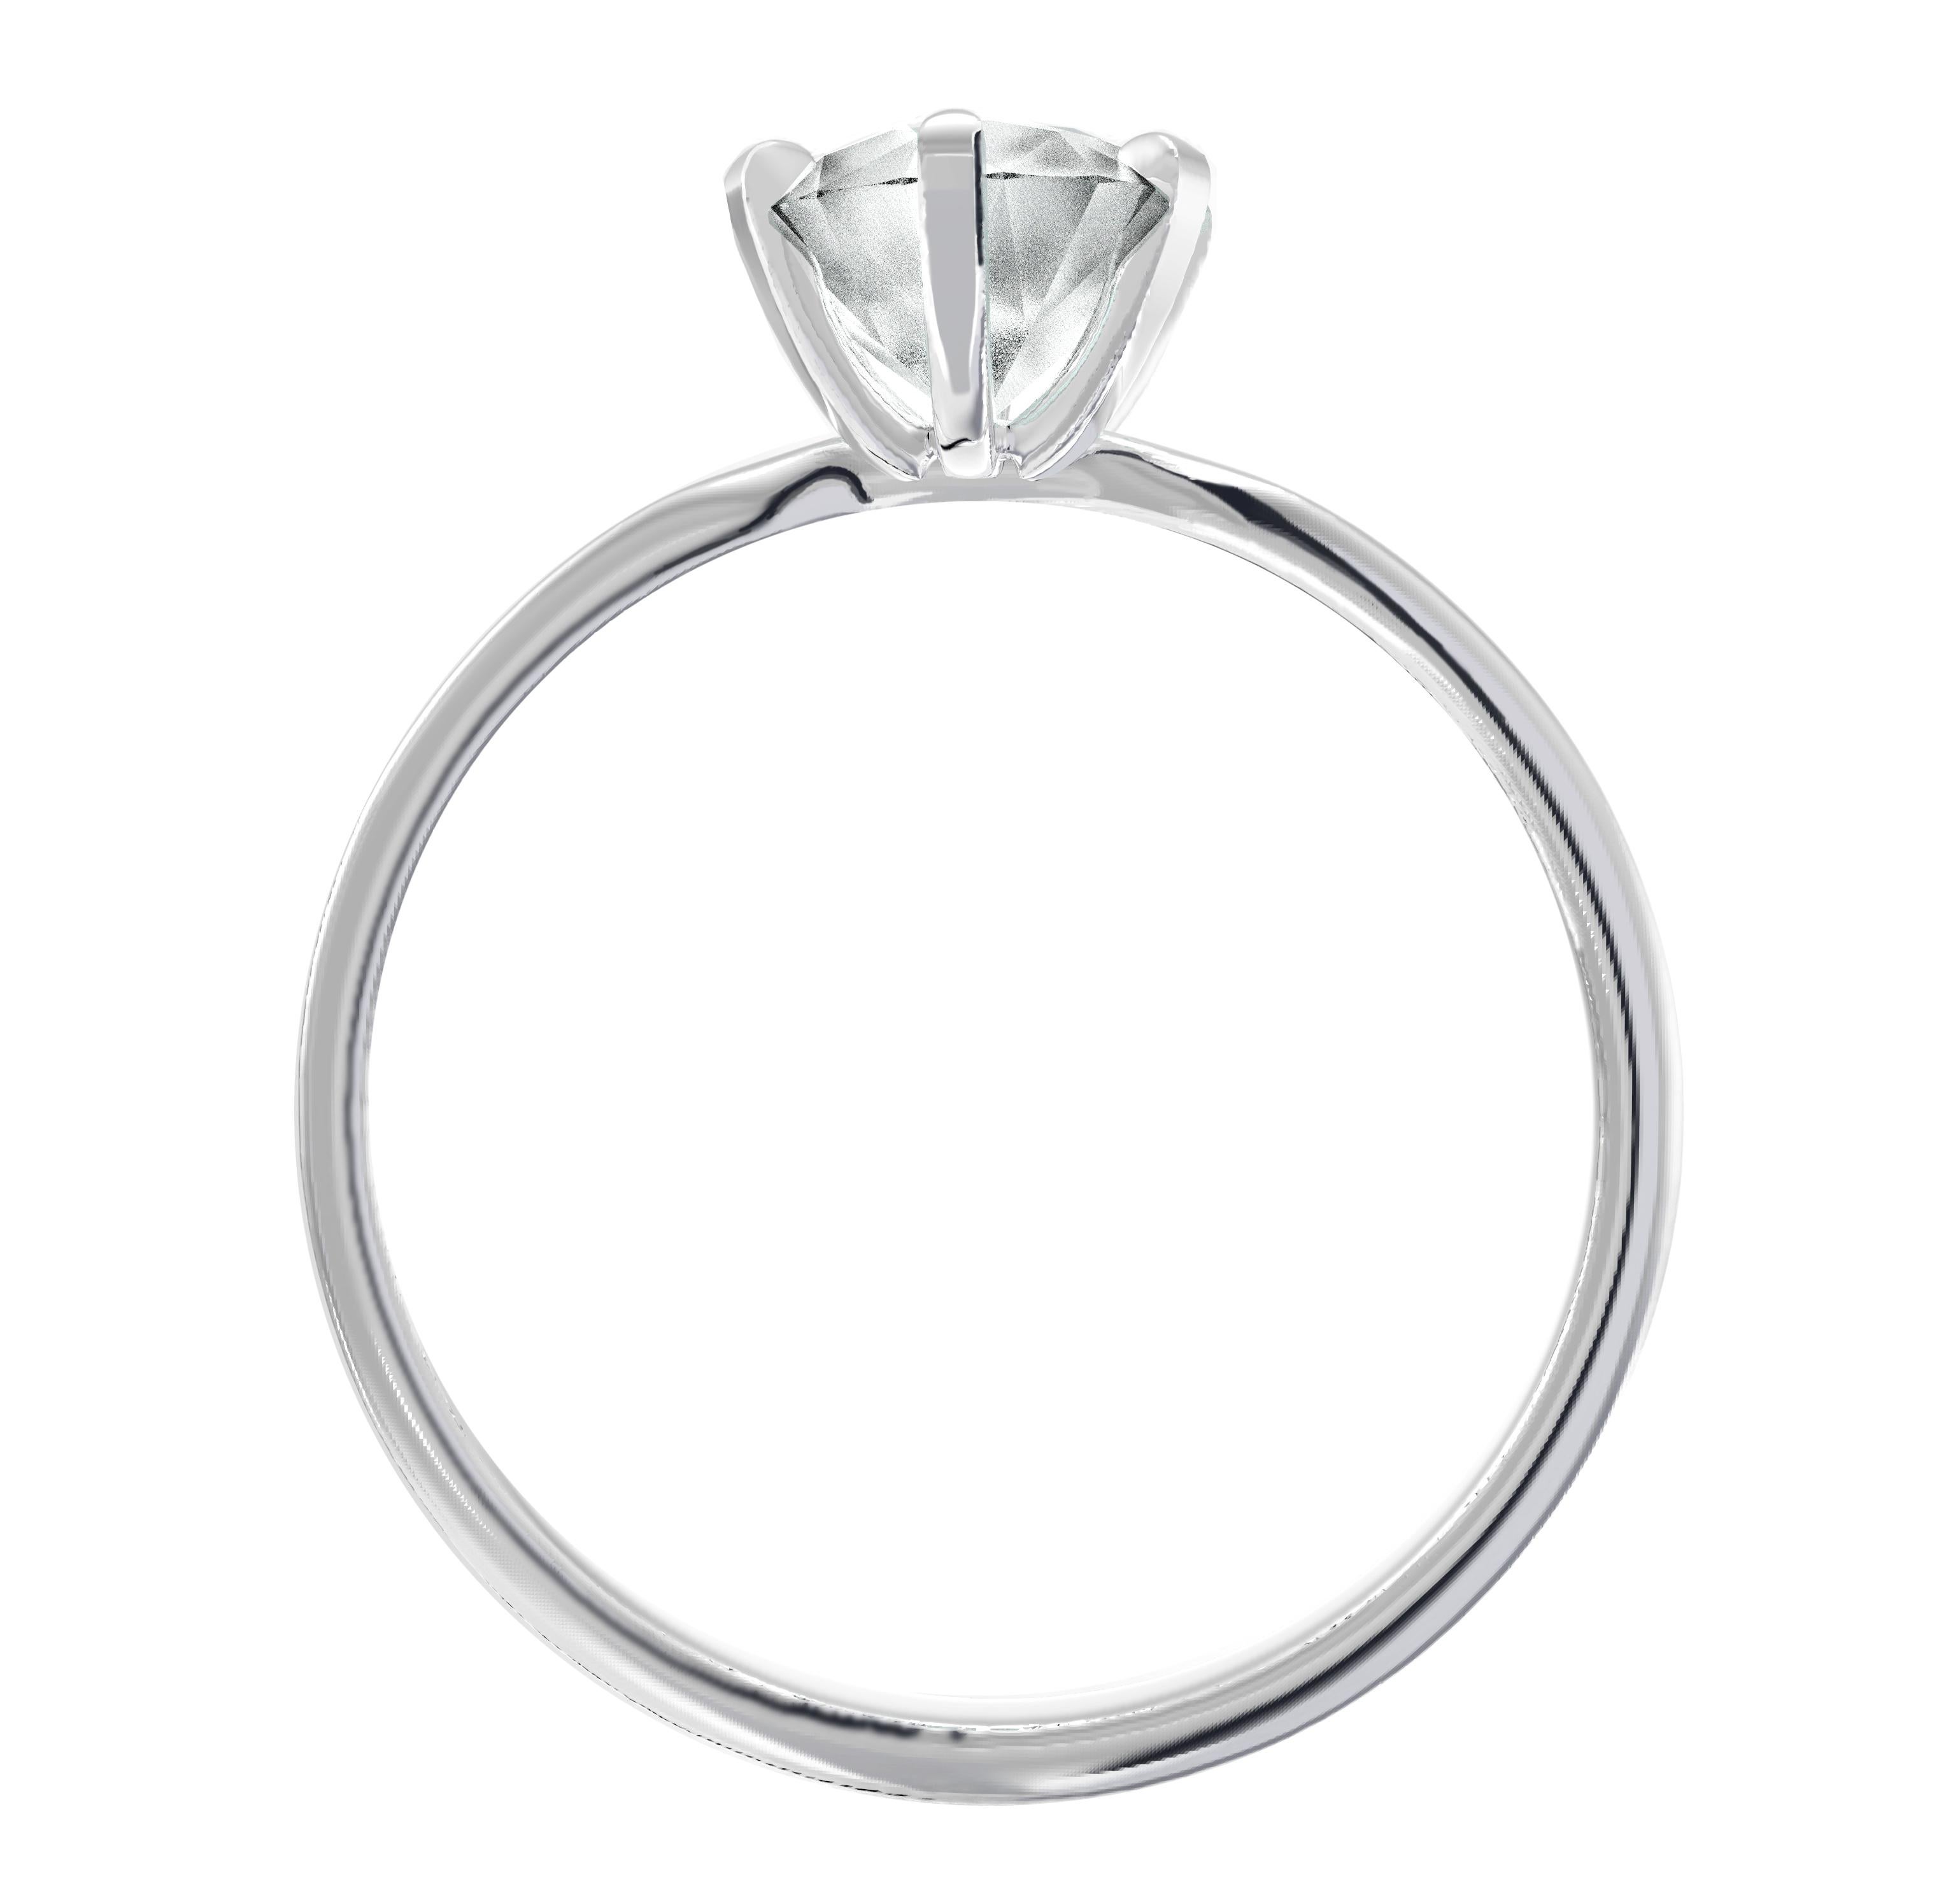 Artist 18 Karat White Gold Classic Engagement Ring with GIA Certified 1 Carat Diamond